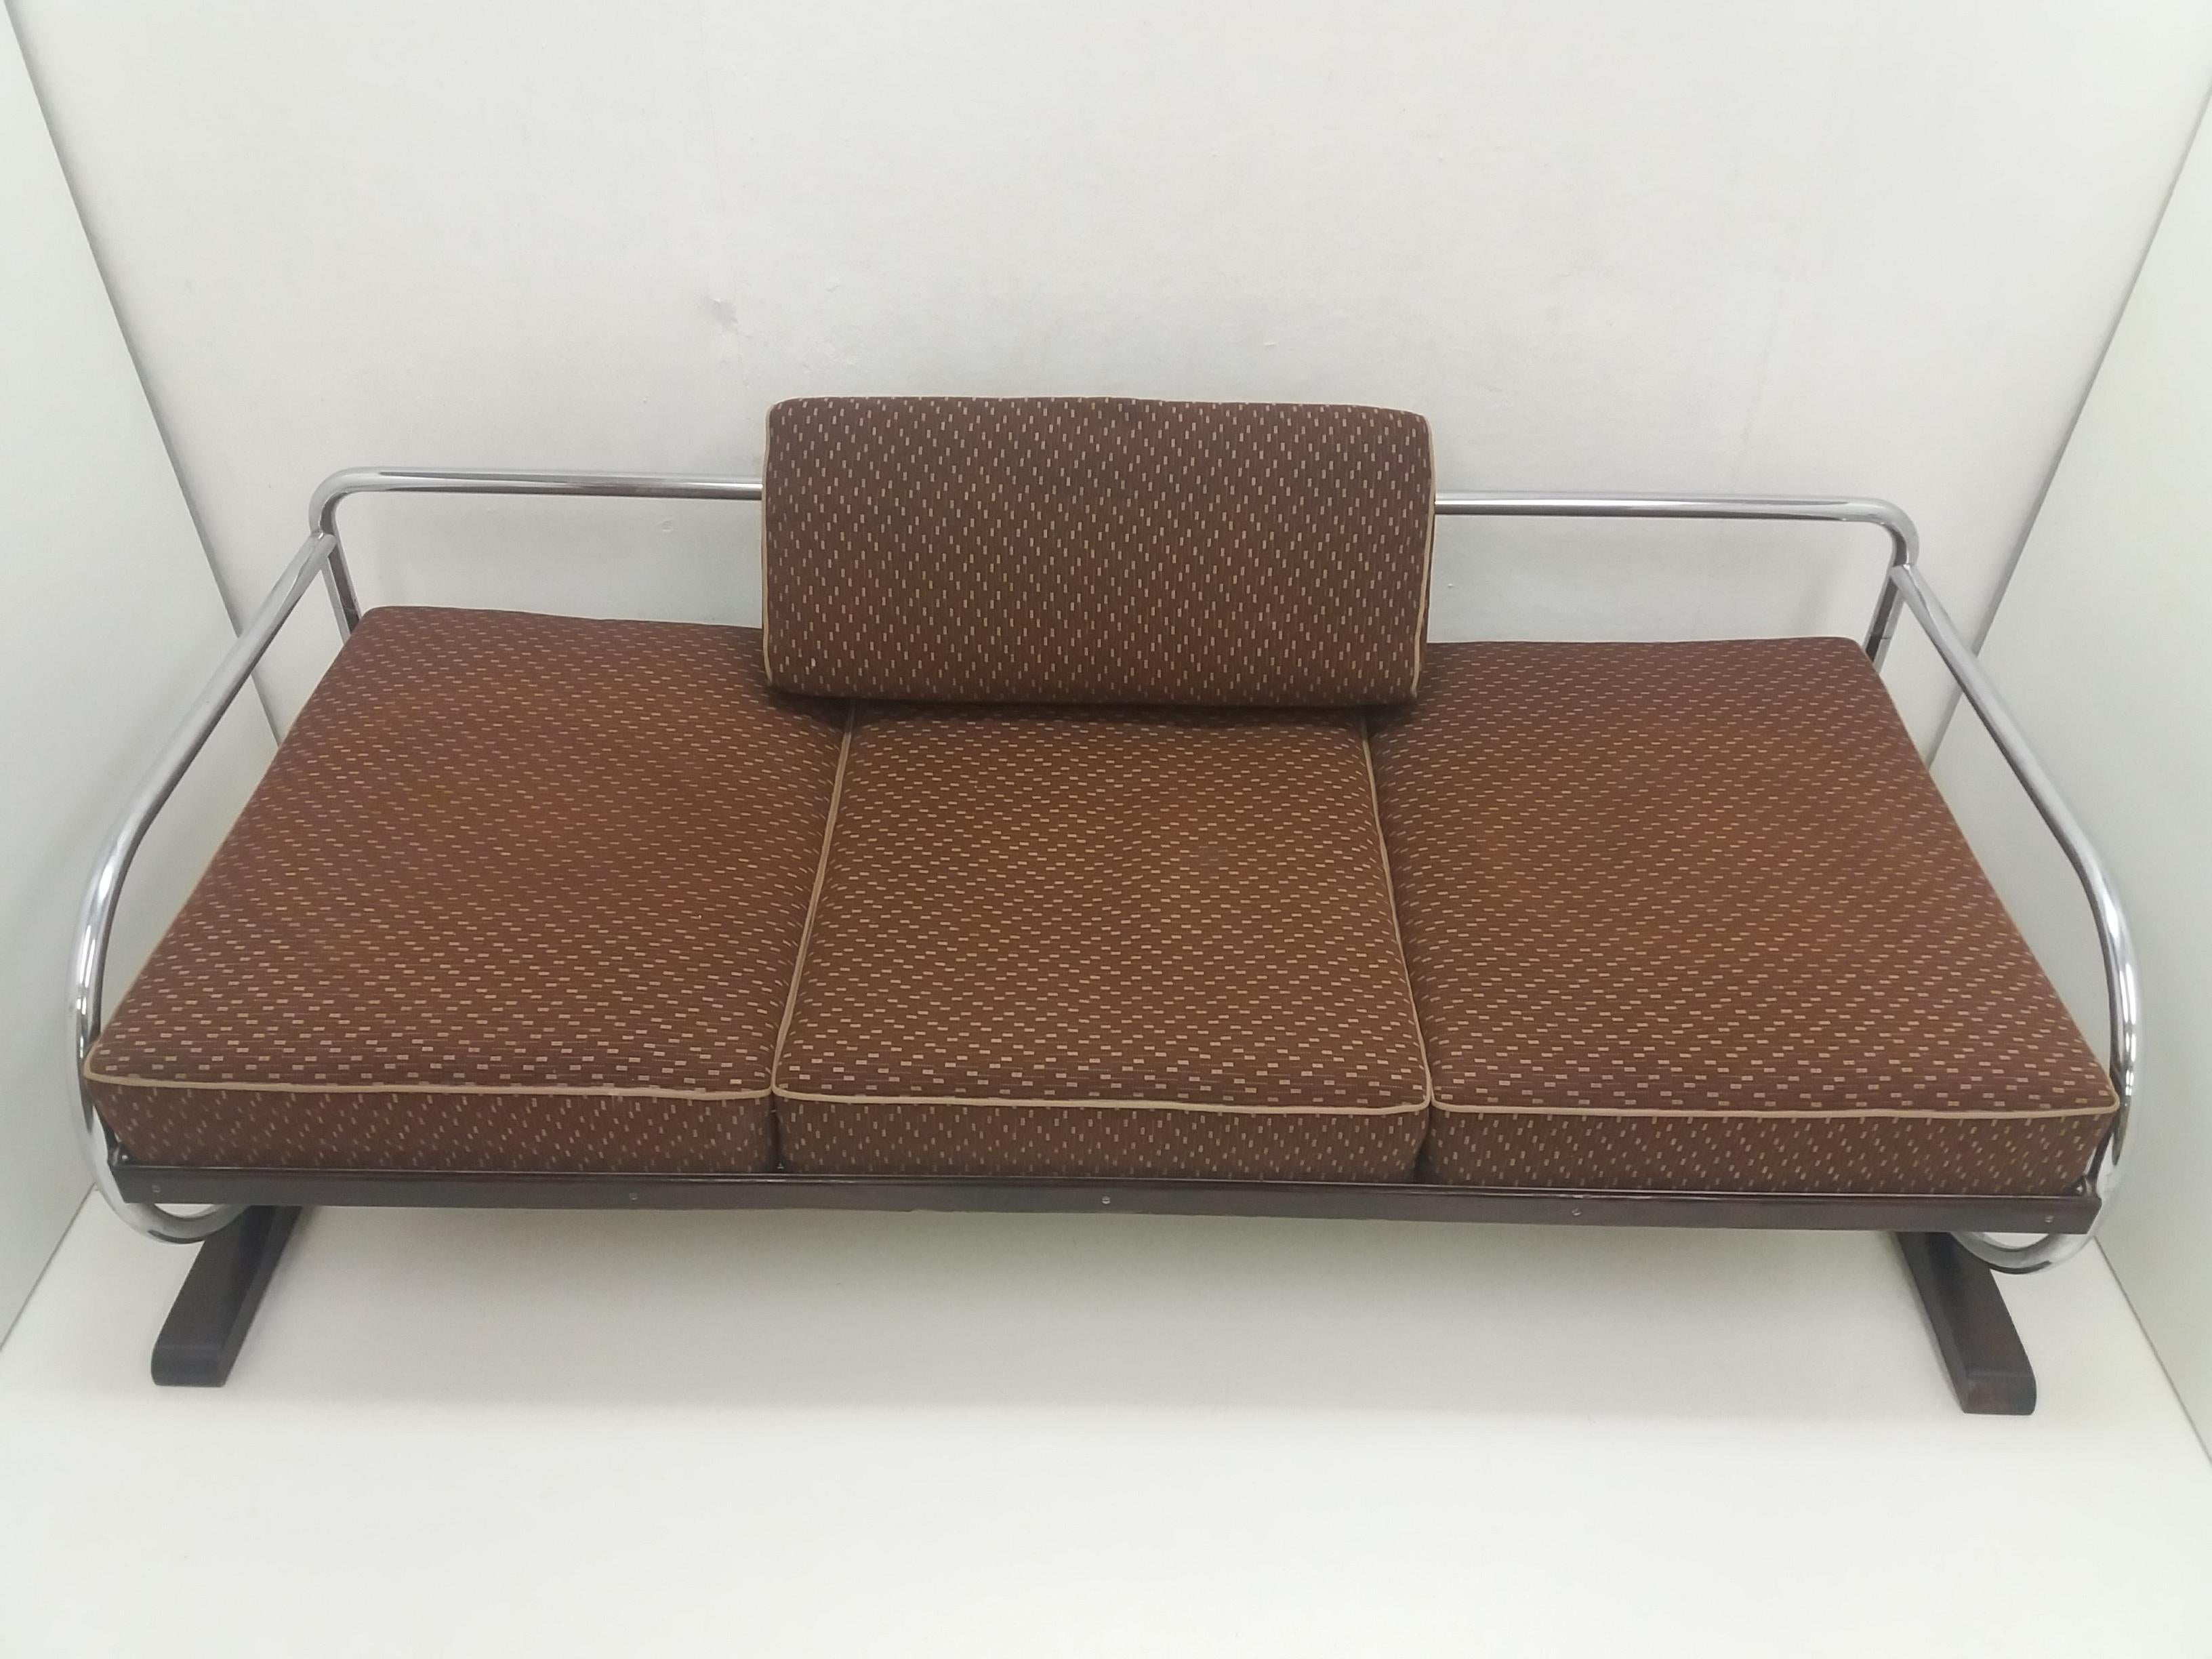 - Made in Czechoslovakia
- Made of chrome, fabric
- Original upholstery
- Dimensions of mattress: W 185 cm x D 80 cm
- Good, original condition.